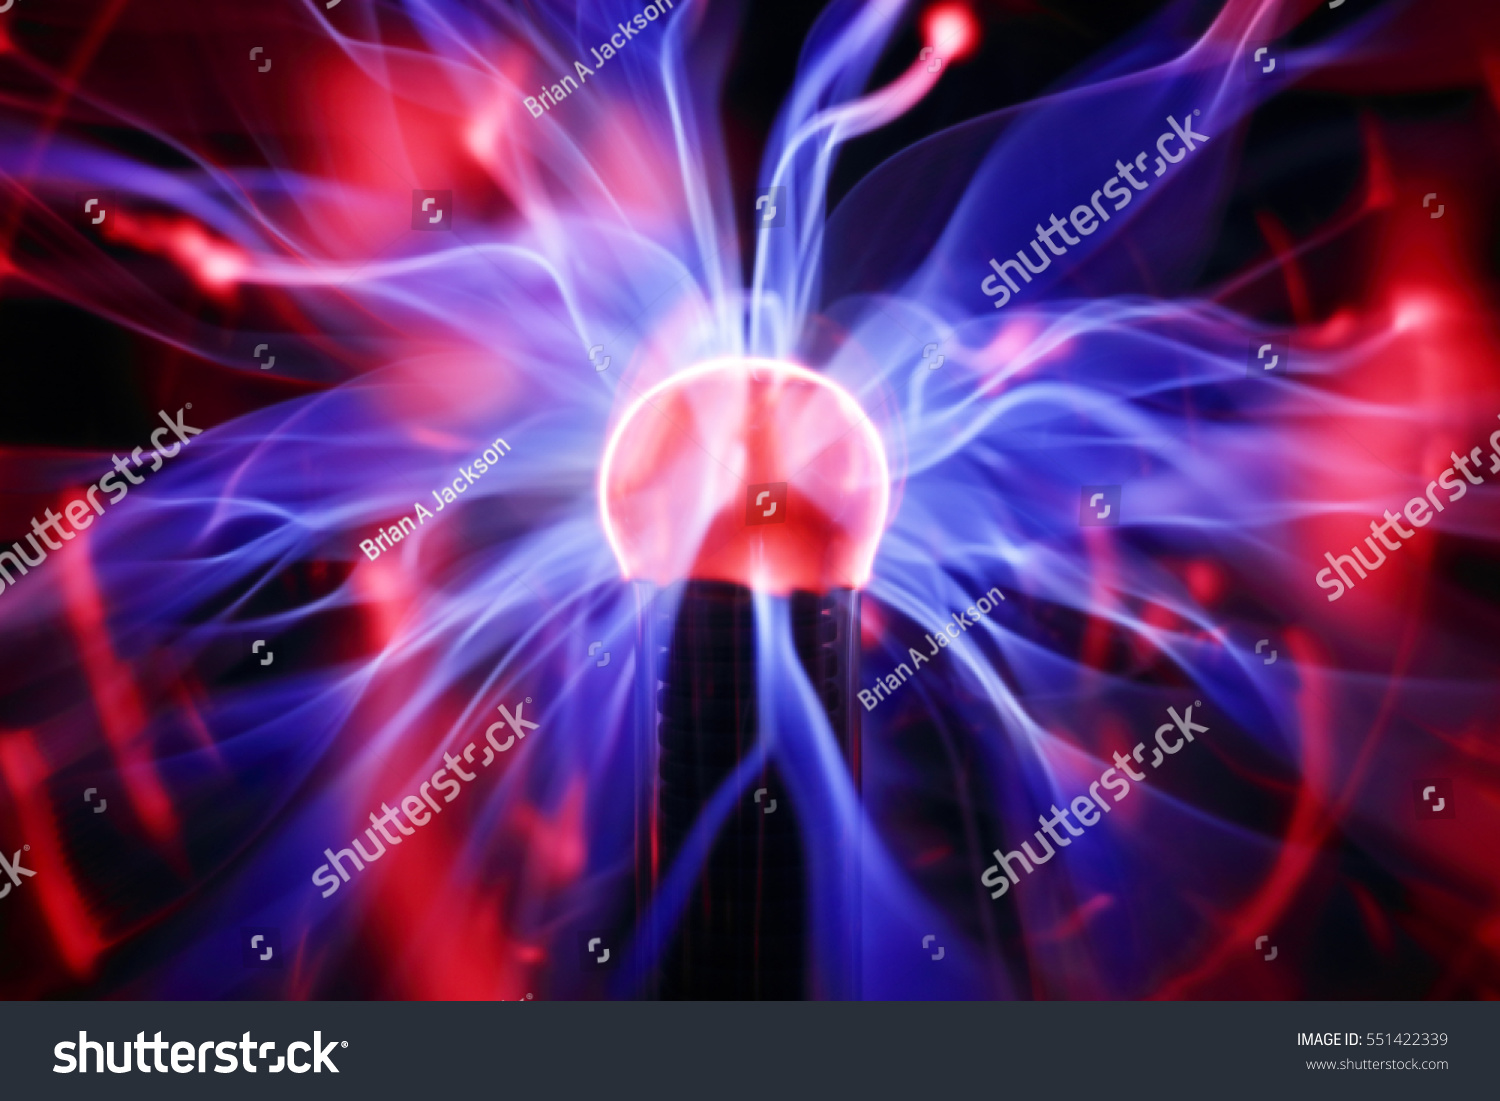 Plasma Ball Lamp Energy Touching Glowing Stock Photo 551422339 - Shutterstock